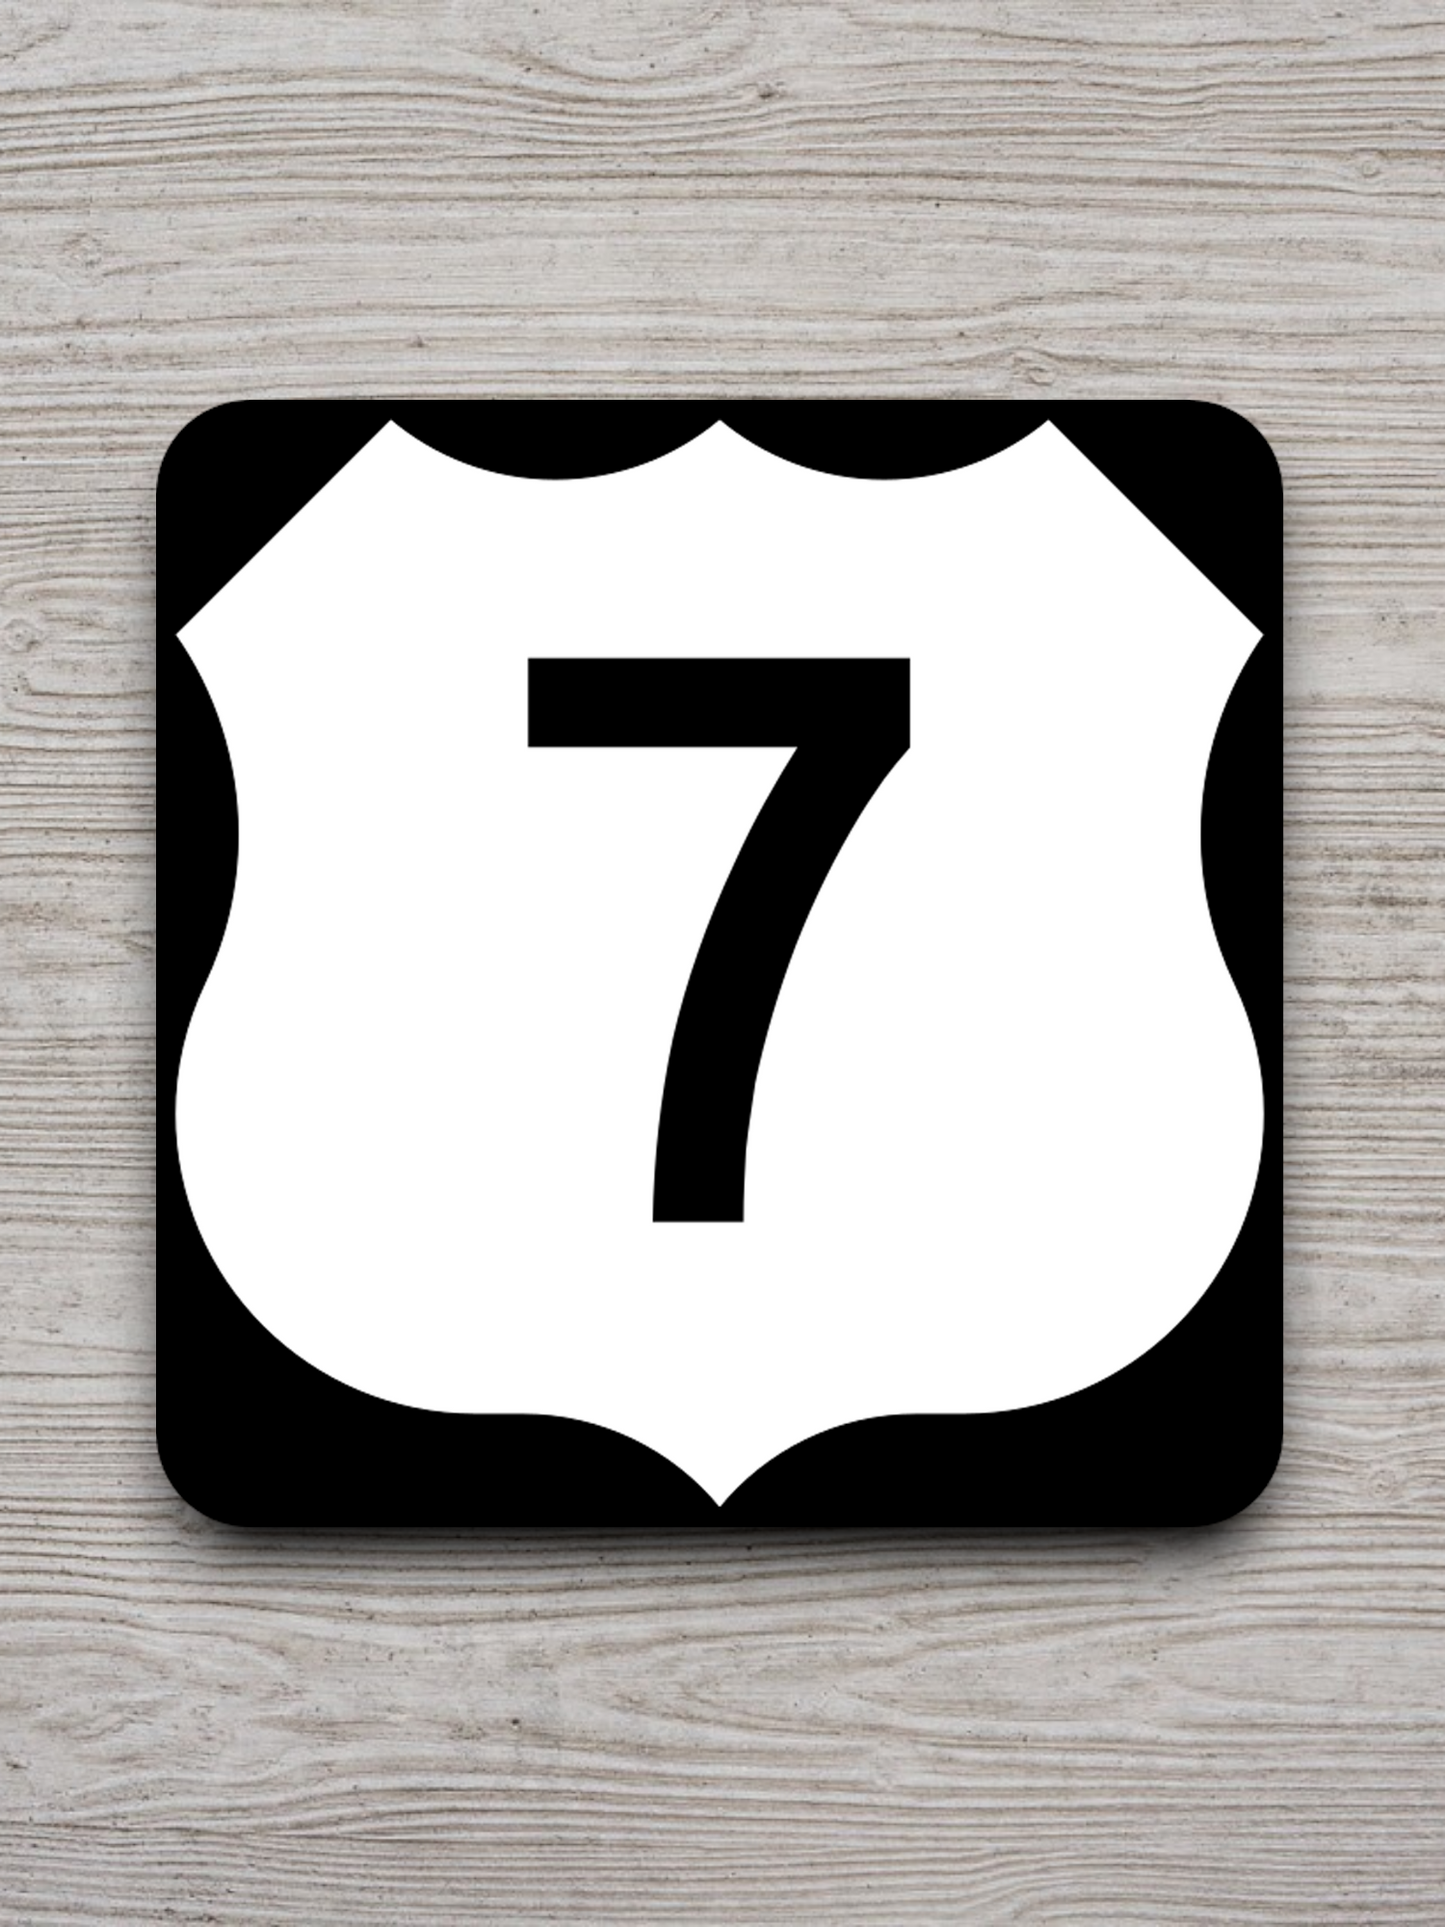 U.S. Route 7 Road Sign Sticker